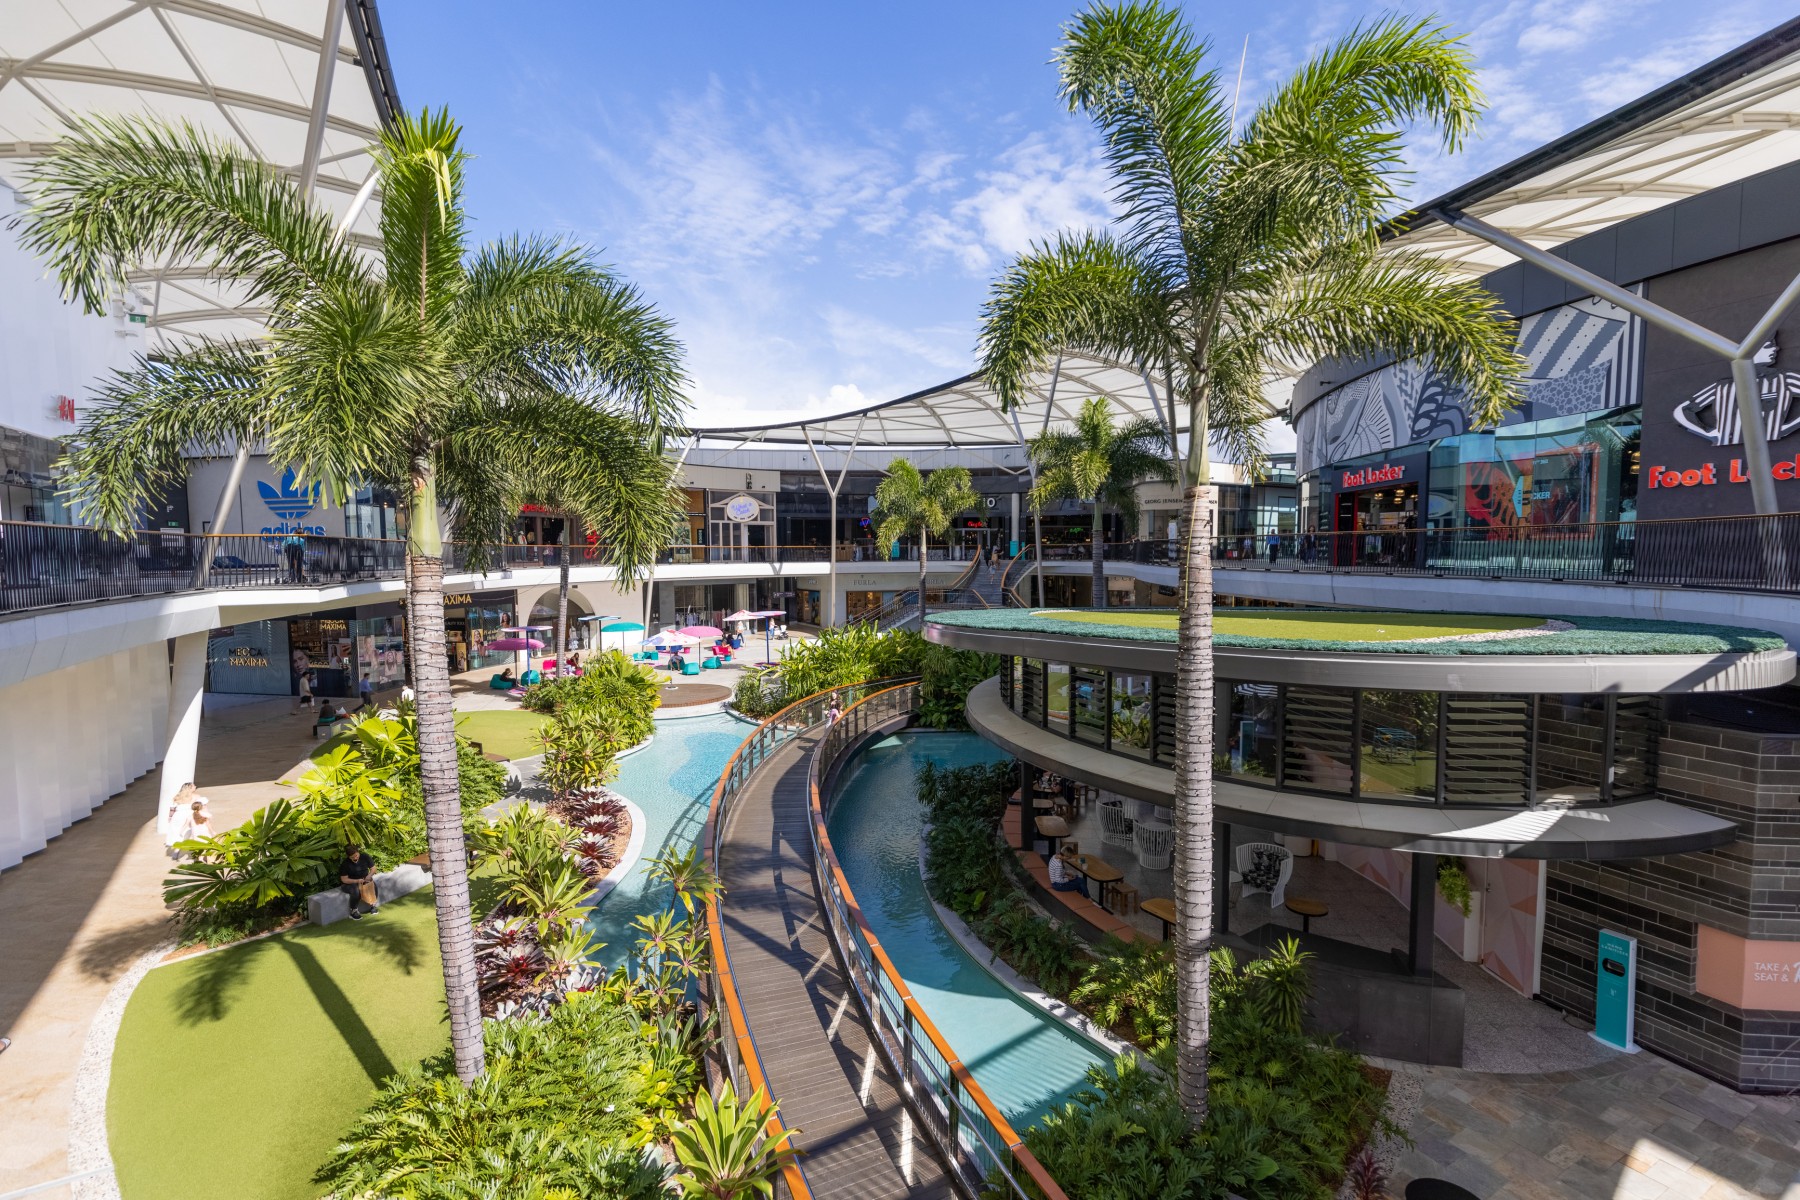 Louis Vuitton has opened an - Pacific Fair Shopping Centre